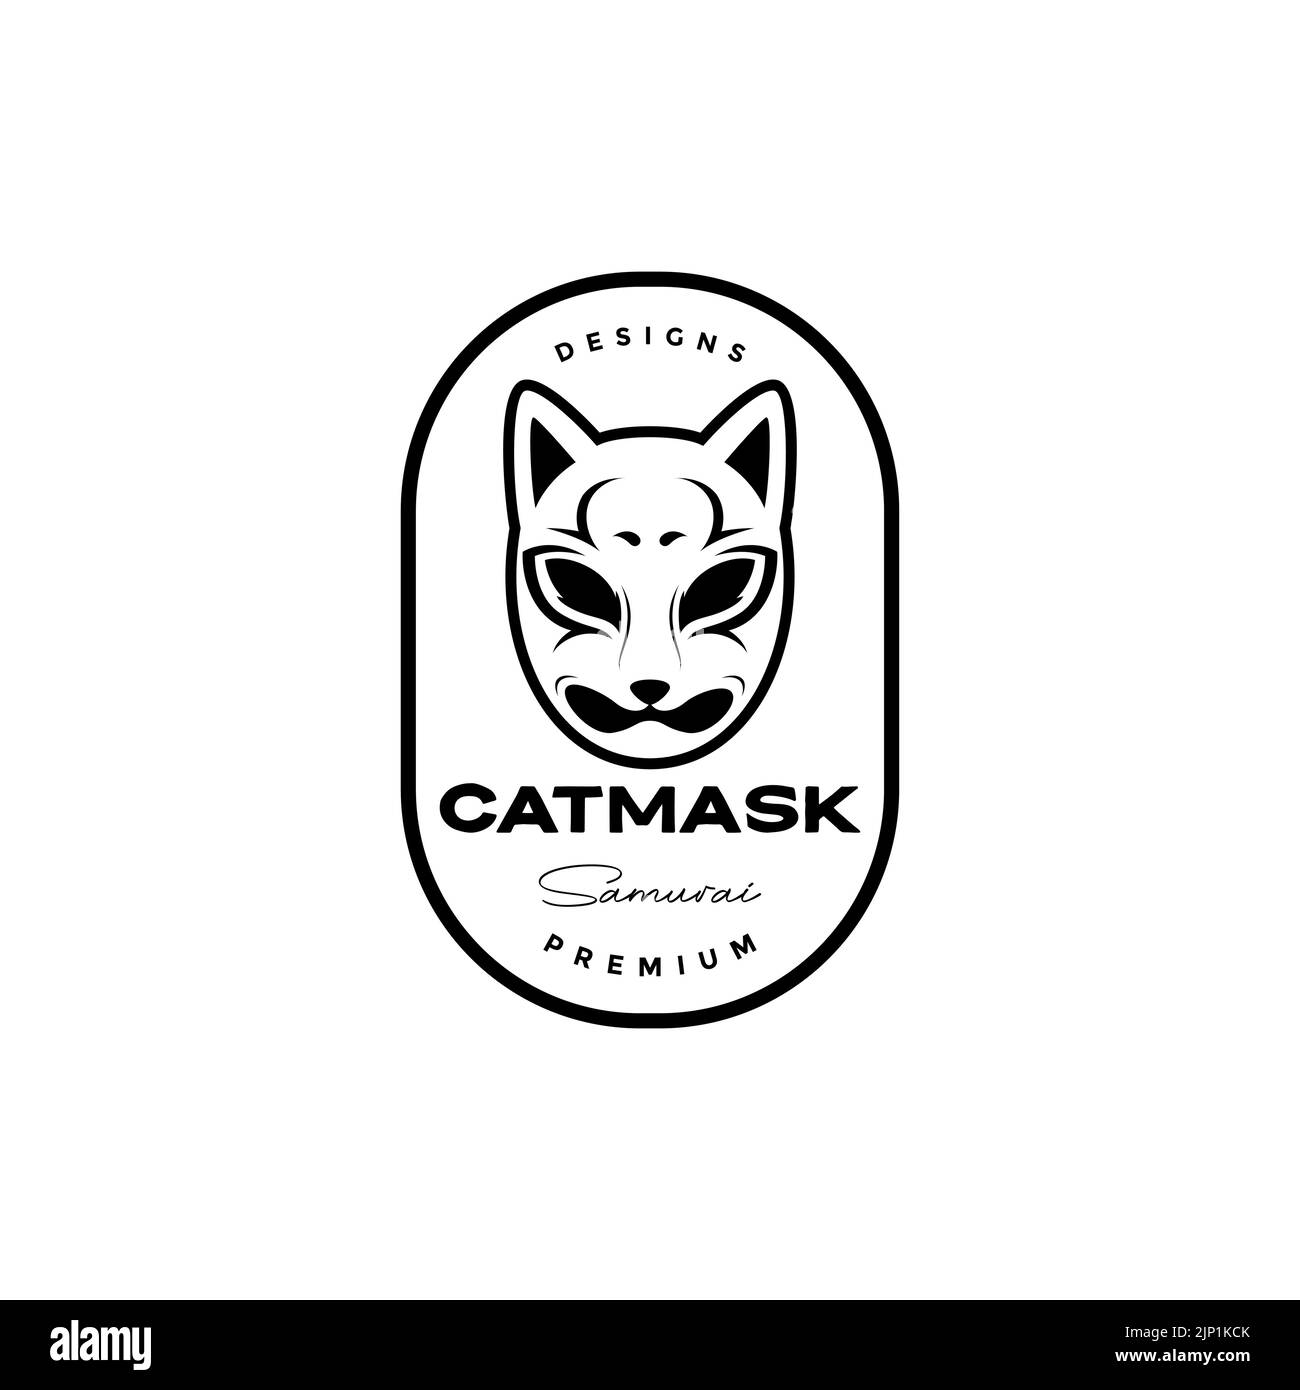 catmask samurai badge vintage logo design Stock Vector